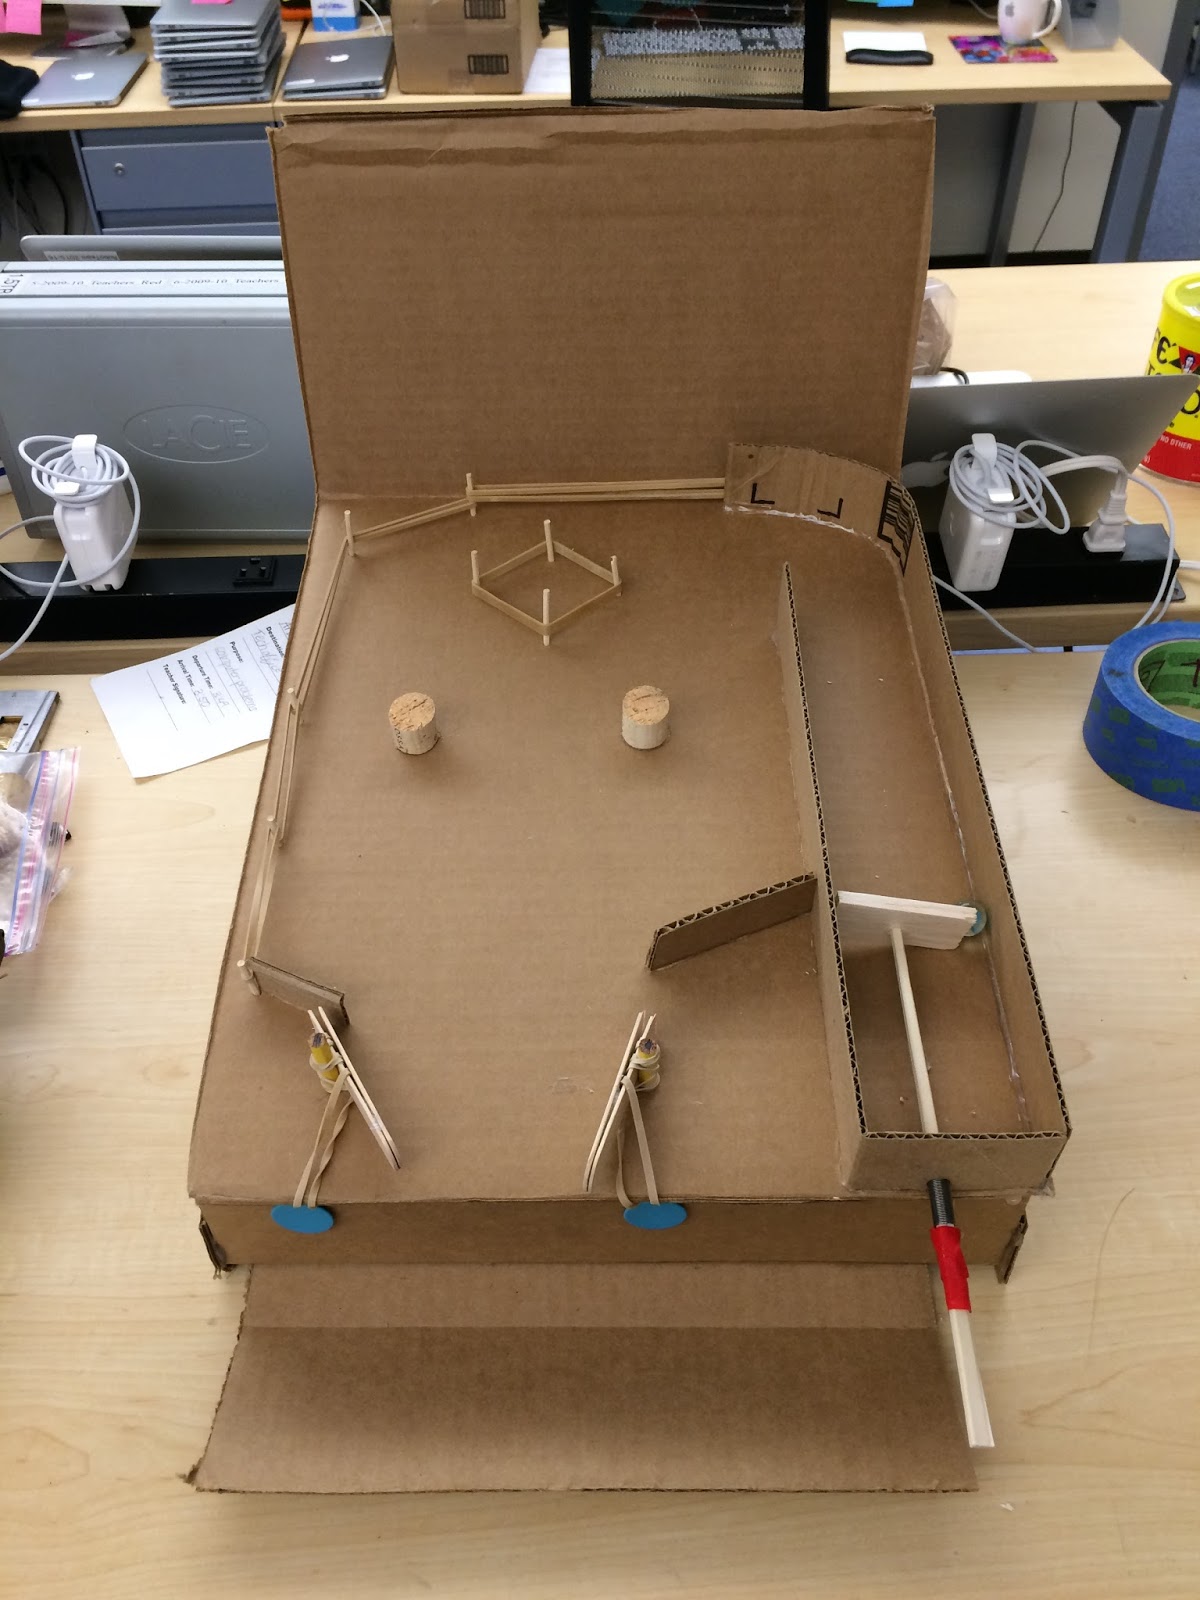 Build Your Own Pinball Machine Cardboard Construction Kit 